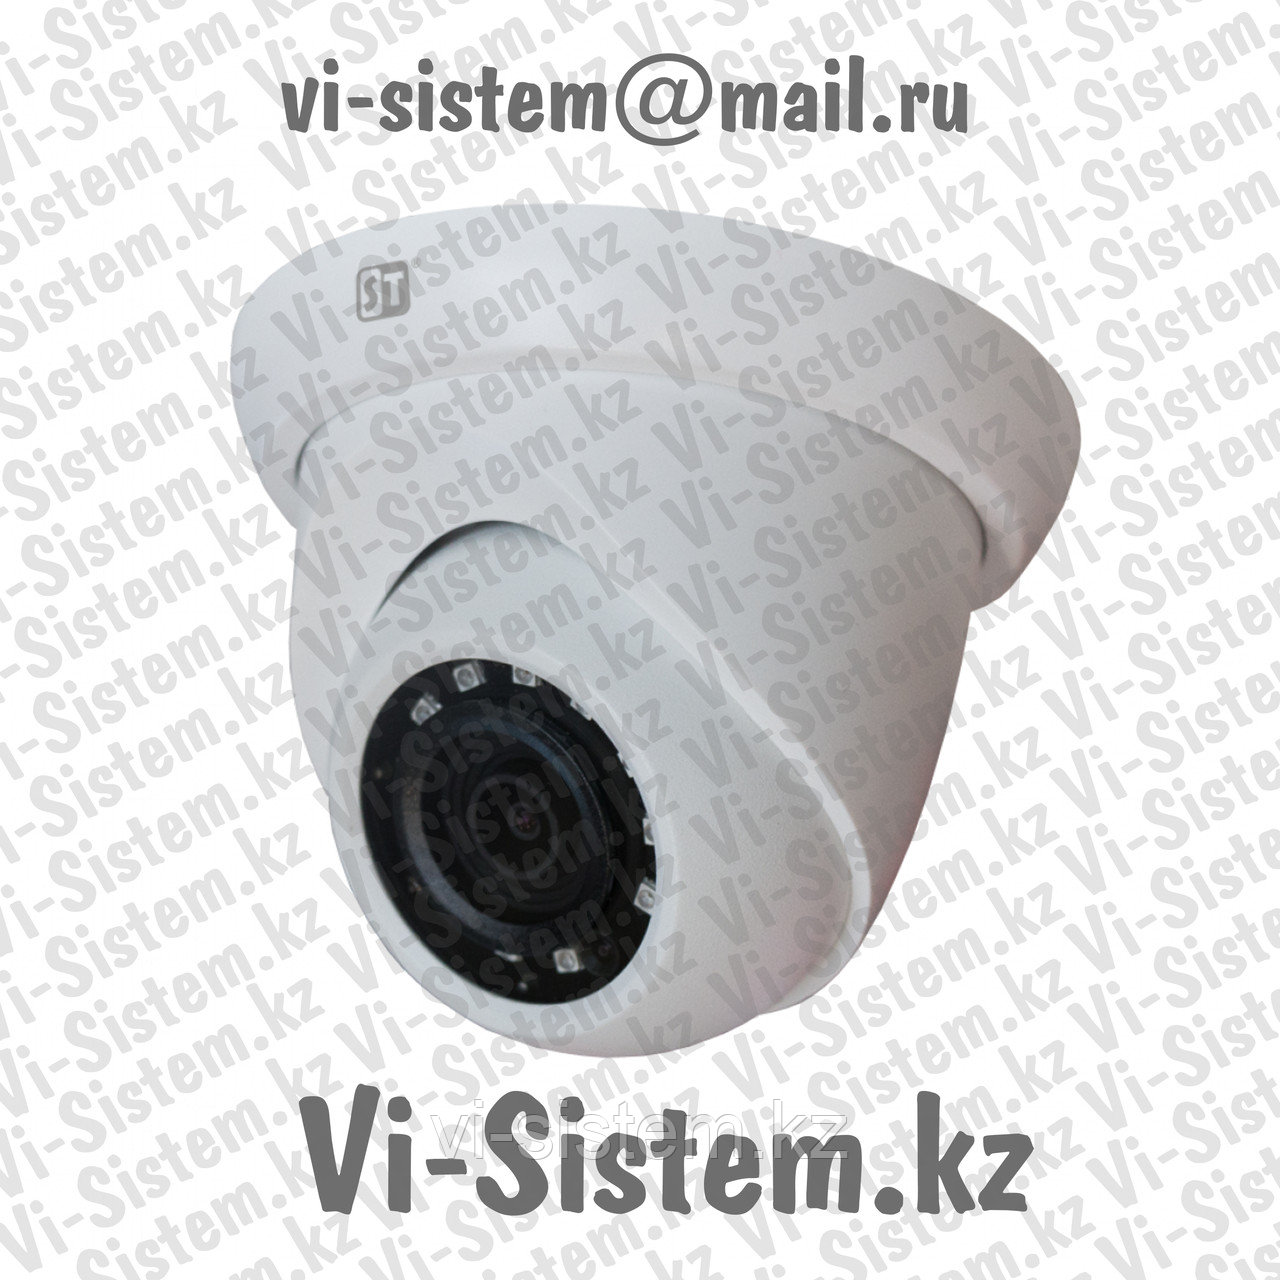 IP-Видеокамера SYNQAR 268 POE 2MP